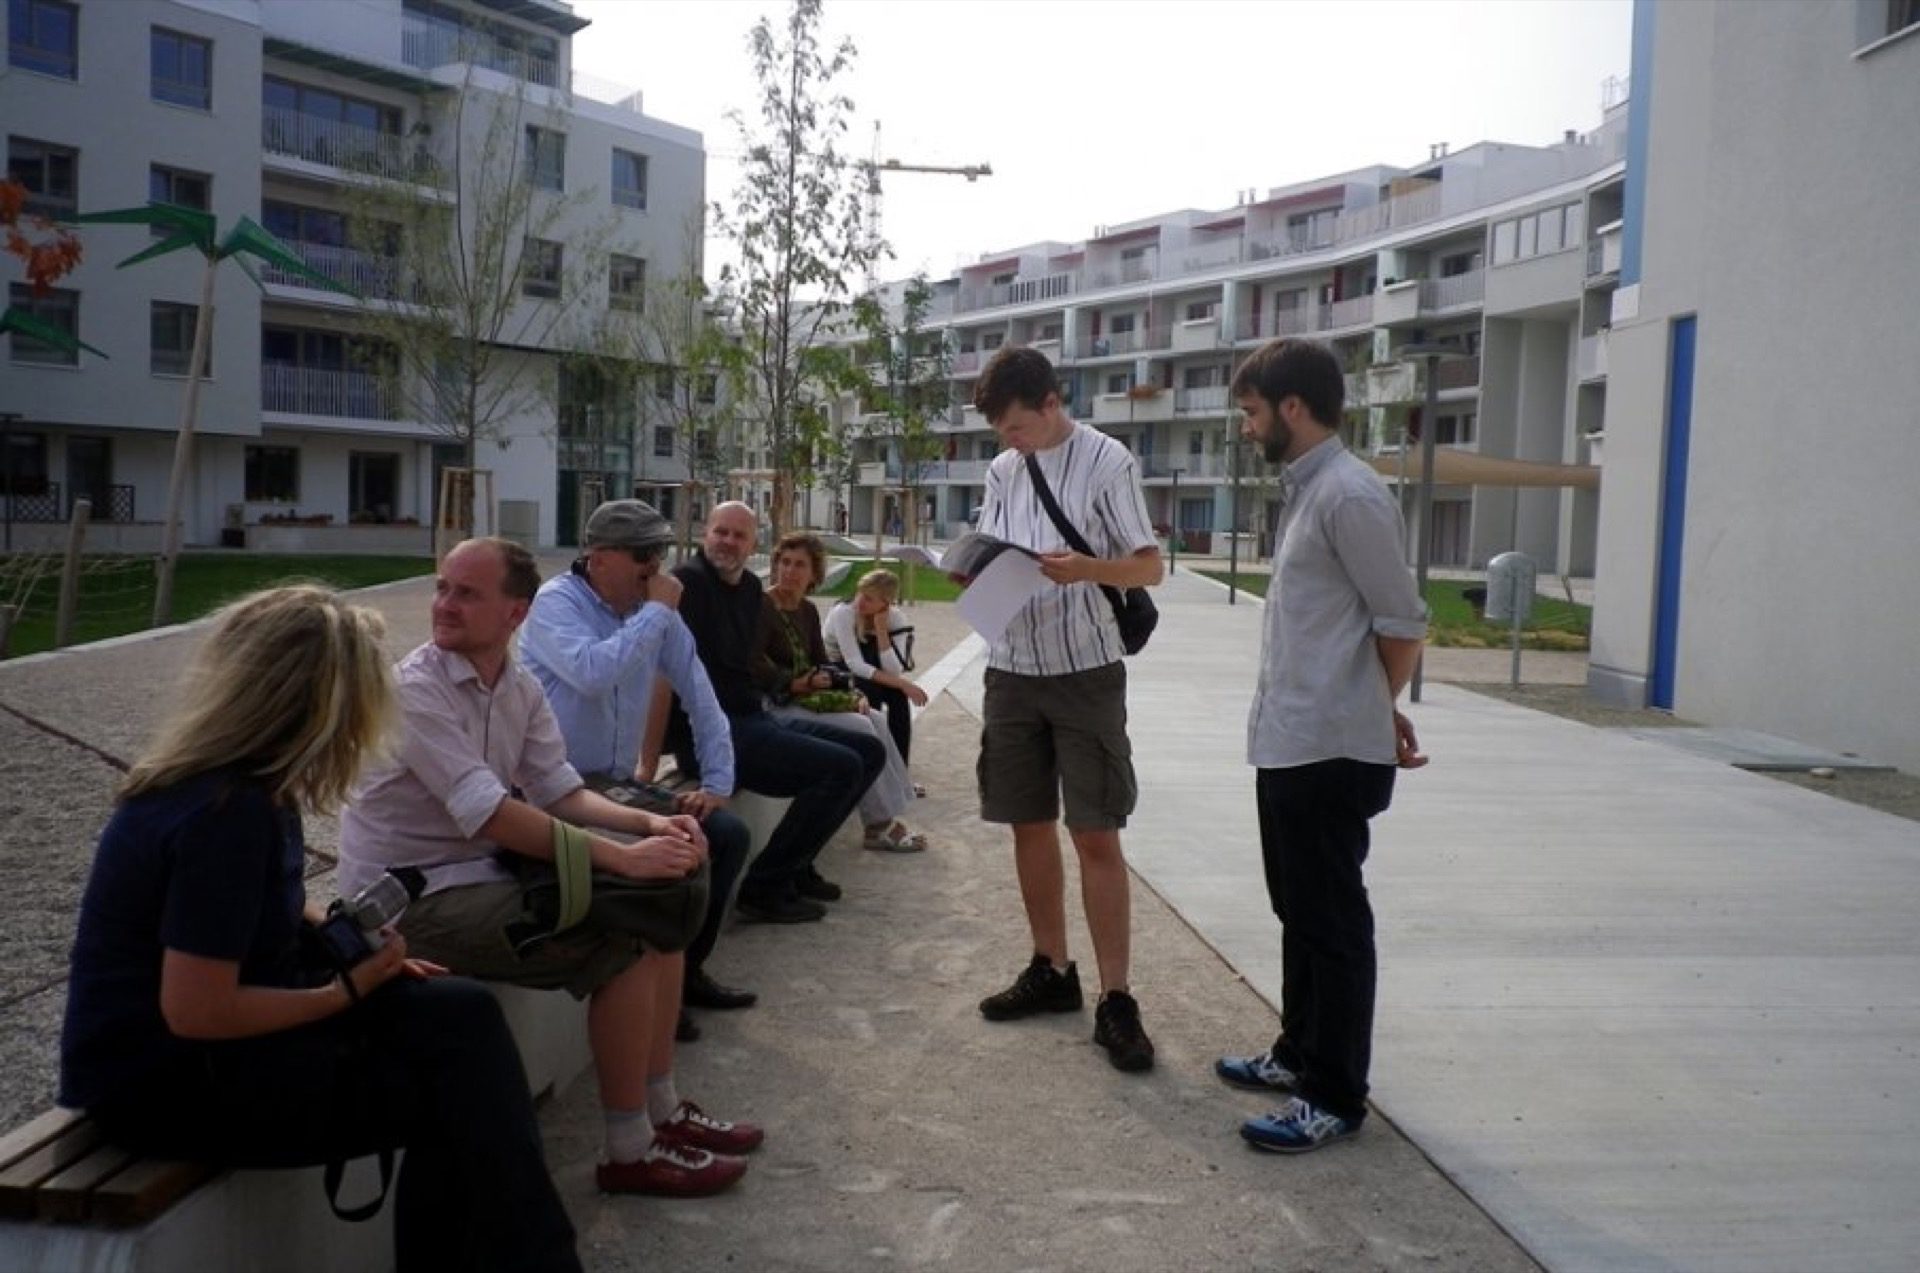 Sozialwohnbau der Gemeinde Wien … jak to dělají sousedé